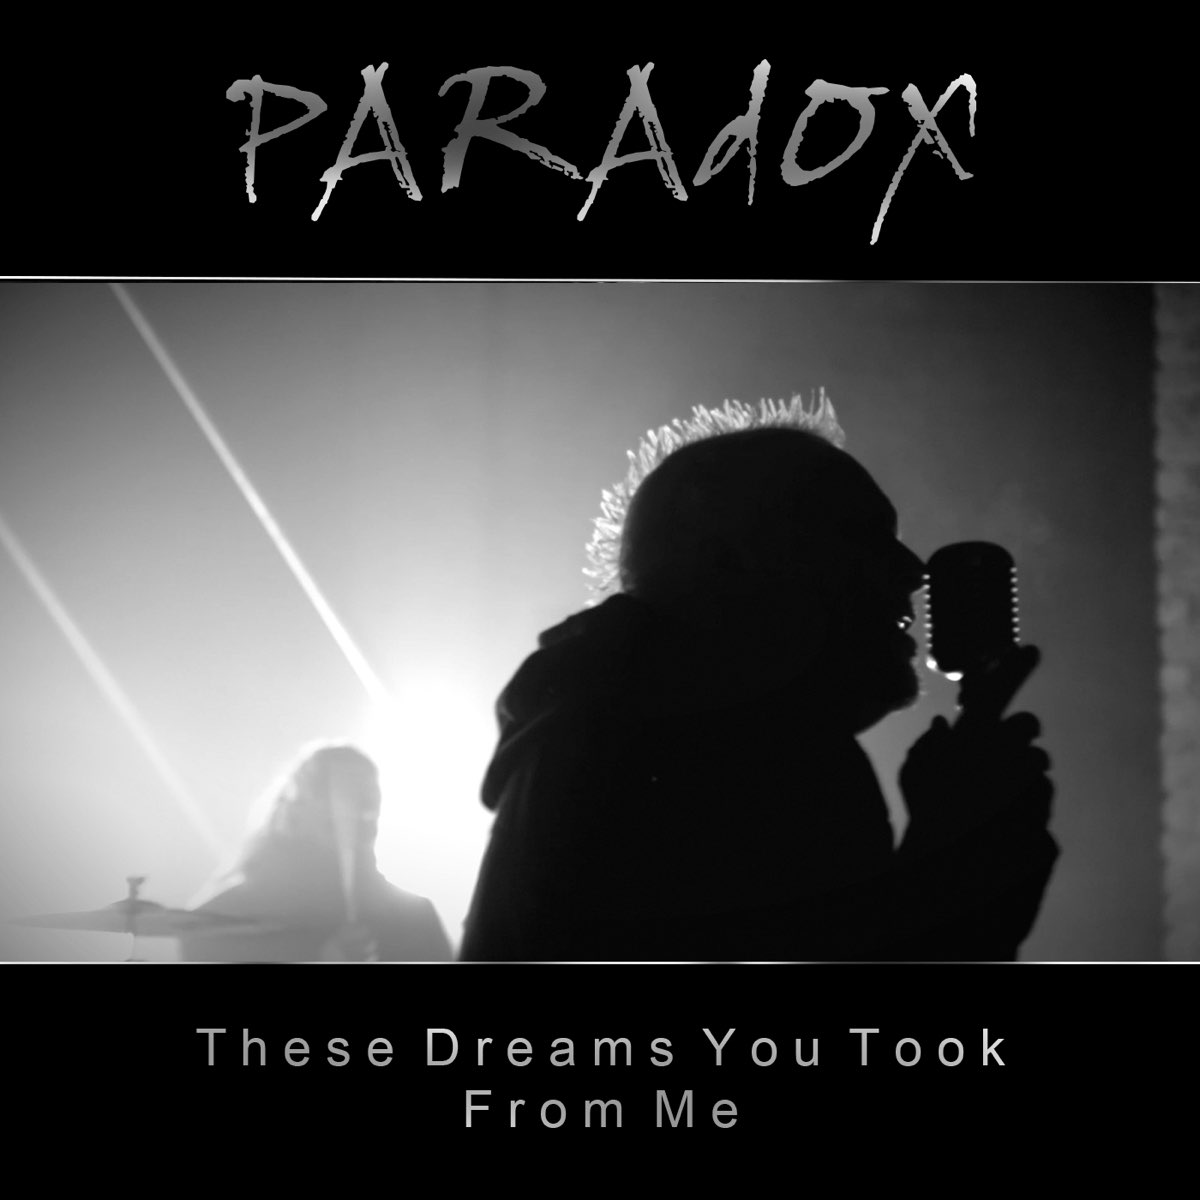 Oxymoron Band альбомы. Paradox группа. Dream you. This Dream of you. This dreams песня